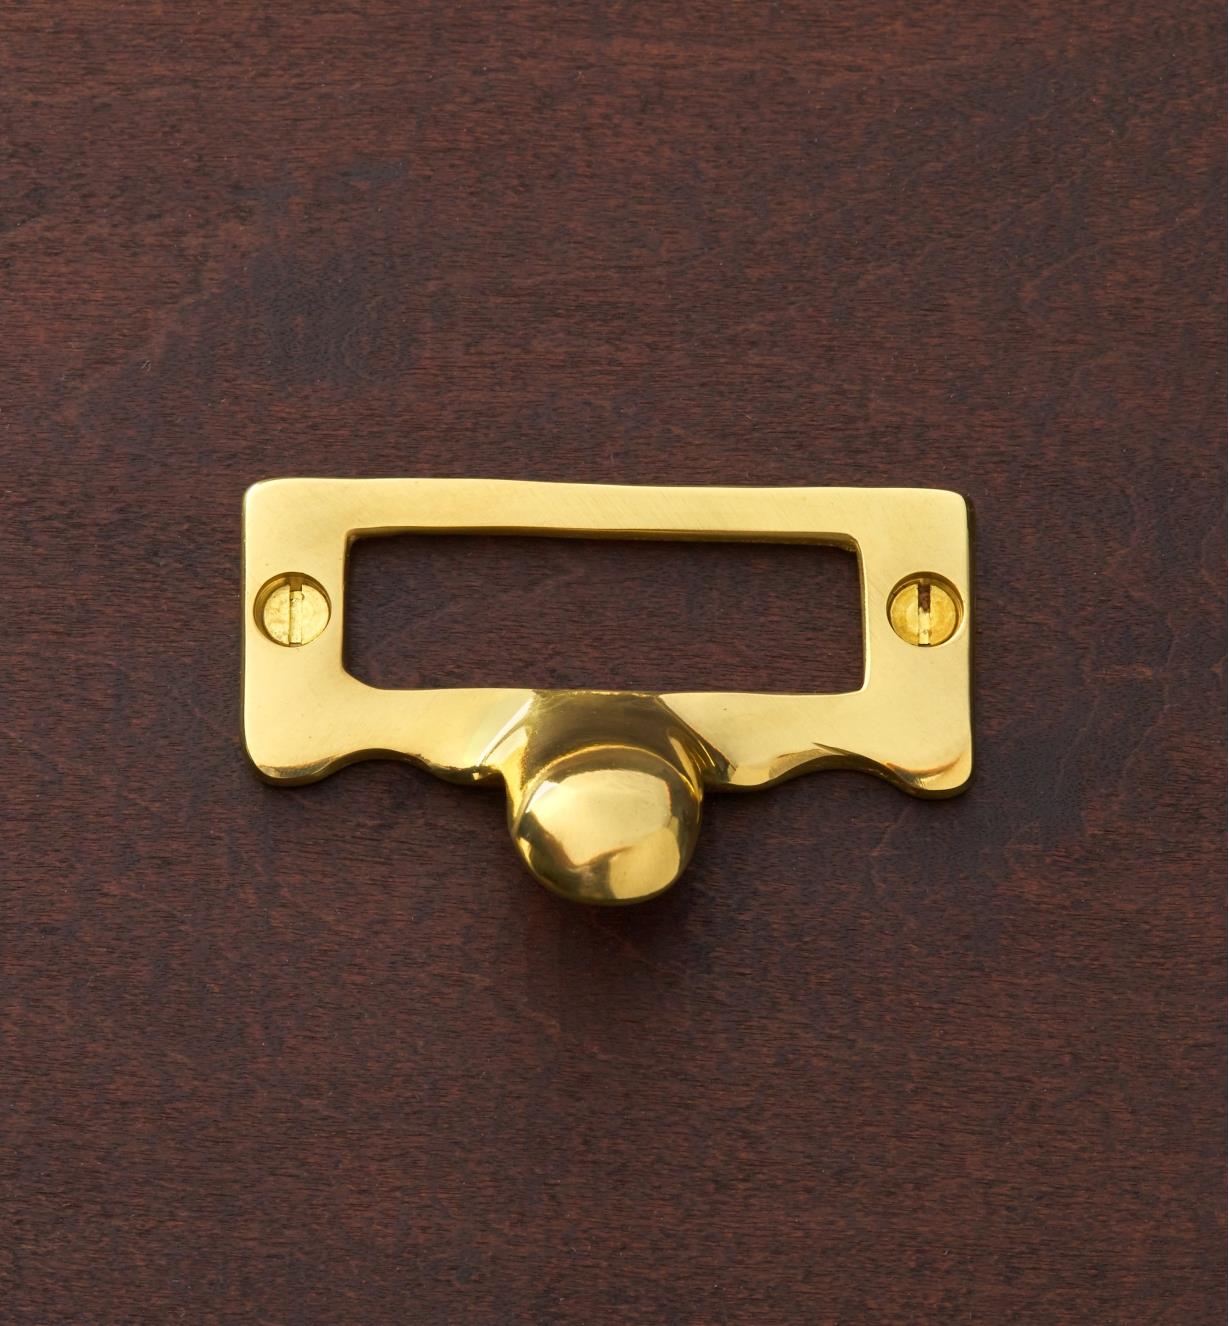 A brass card frame fastened with brass screws